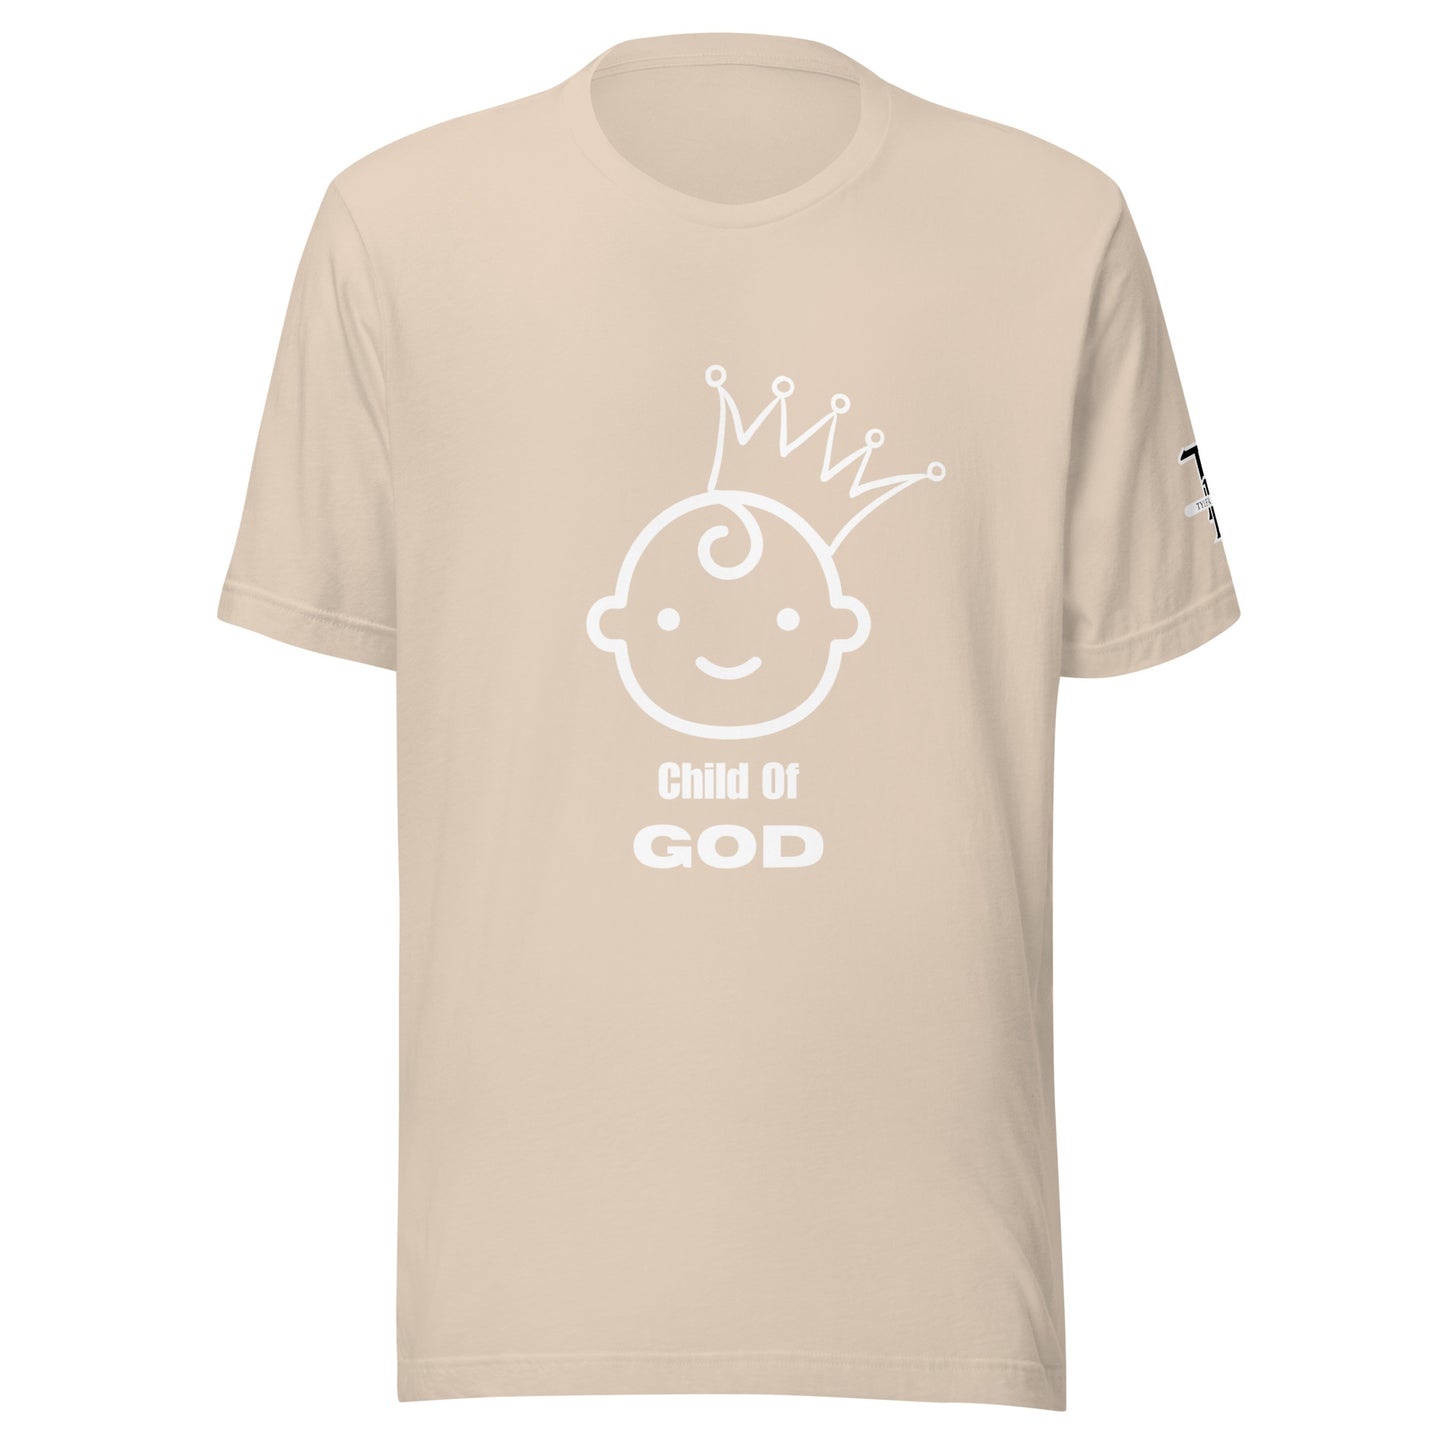 Child Of God T-Shirt